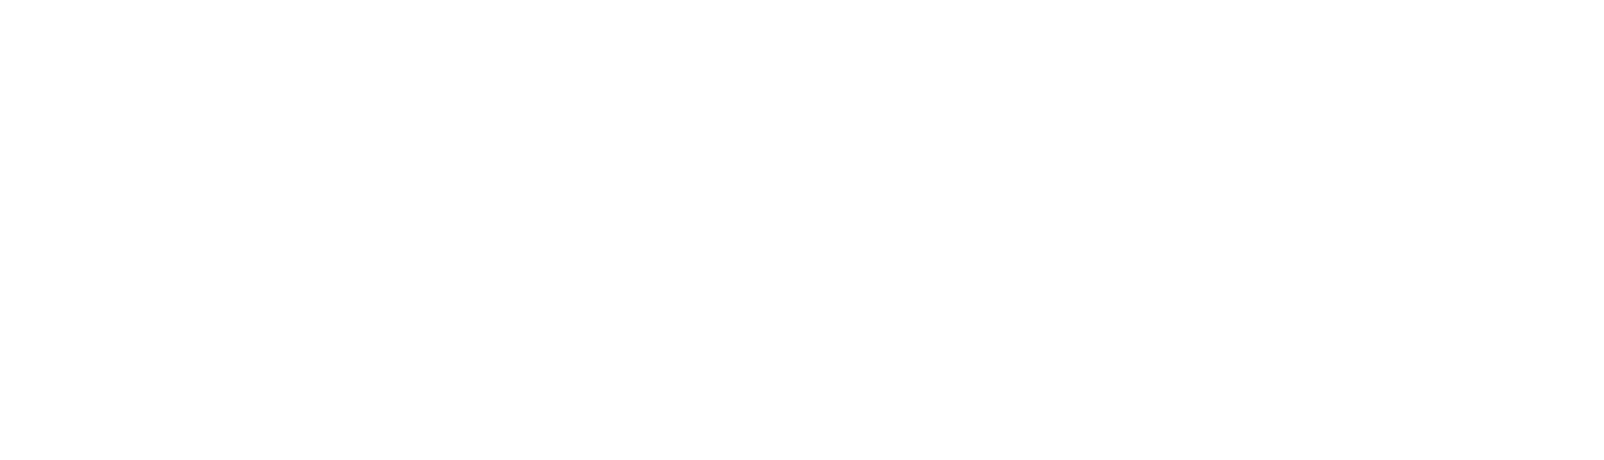 Marvell Technology Group logo grand pour les fonds sombres (PNG transparent)